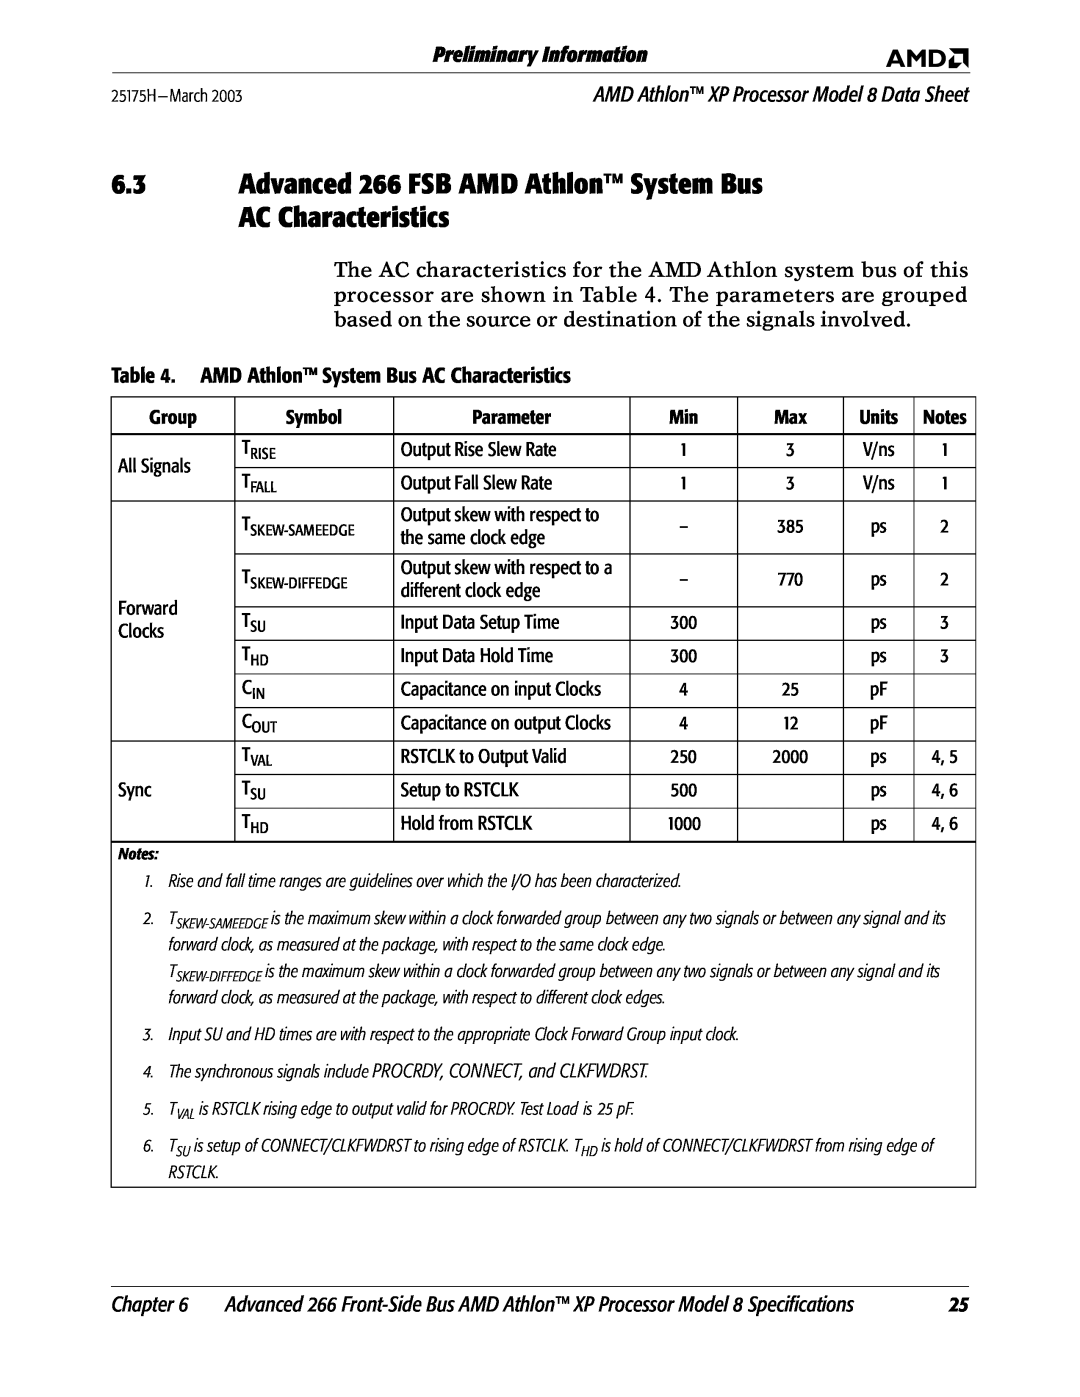 AMD 8 manual Advanced 266 FSB AMD Athlon System Bus AC Characteristics, Preliminary Information, Chapter 